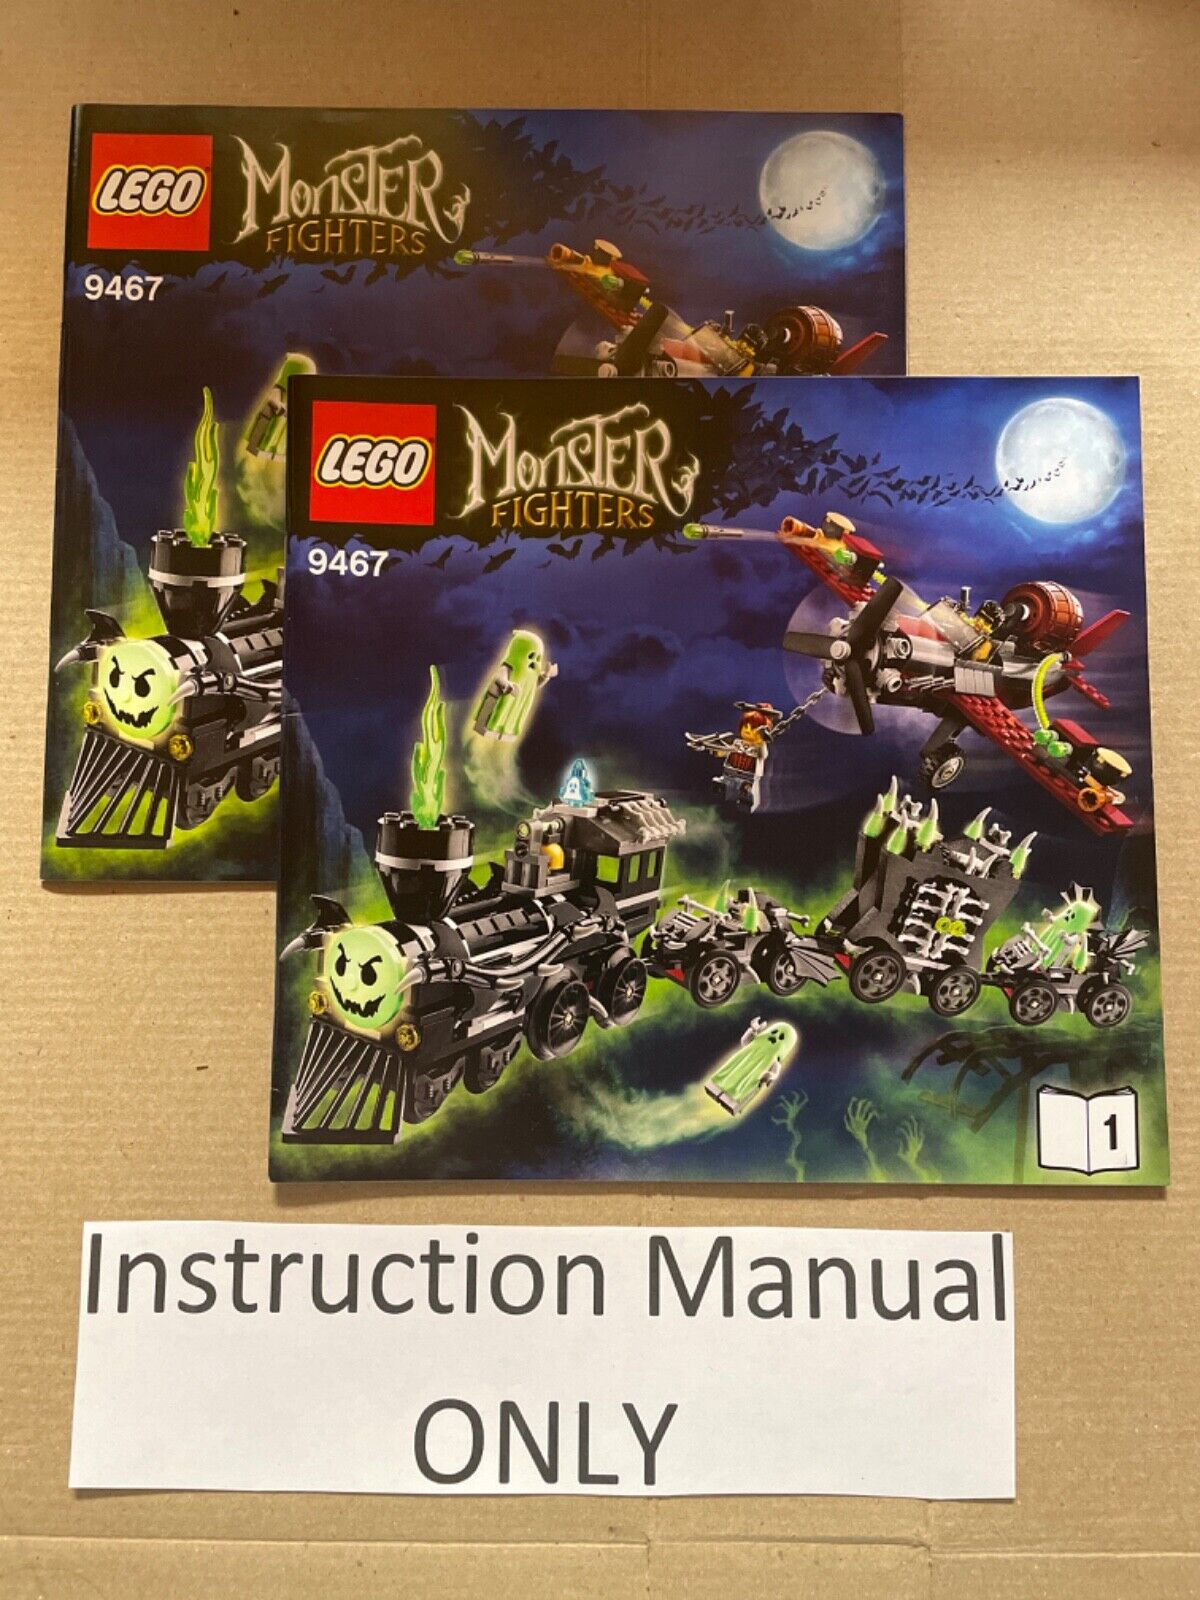 Berygtet brændstof Saucer New Lego Instruction Manual ONLY Monster Fighters Ghost Train 9467 | eBay